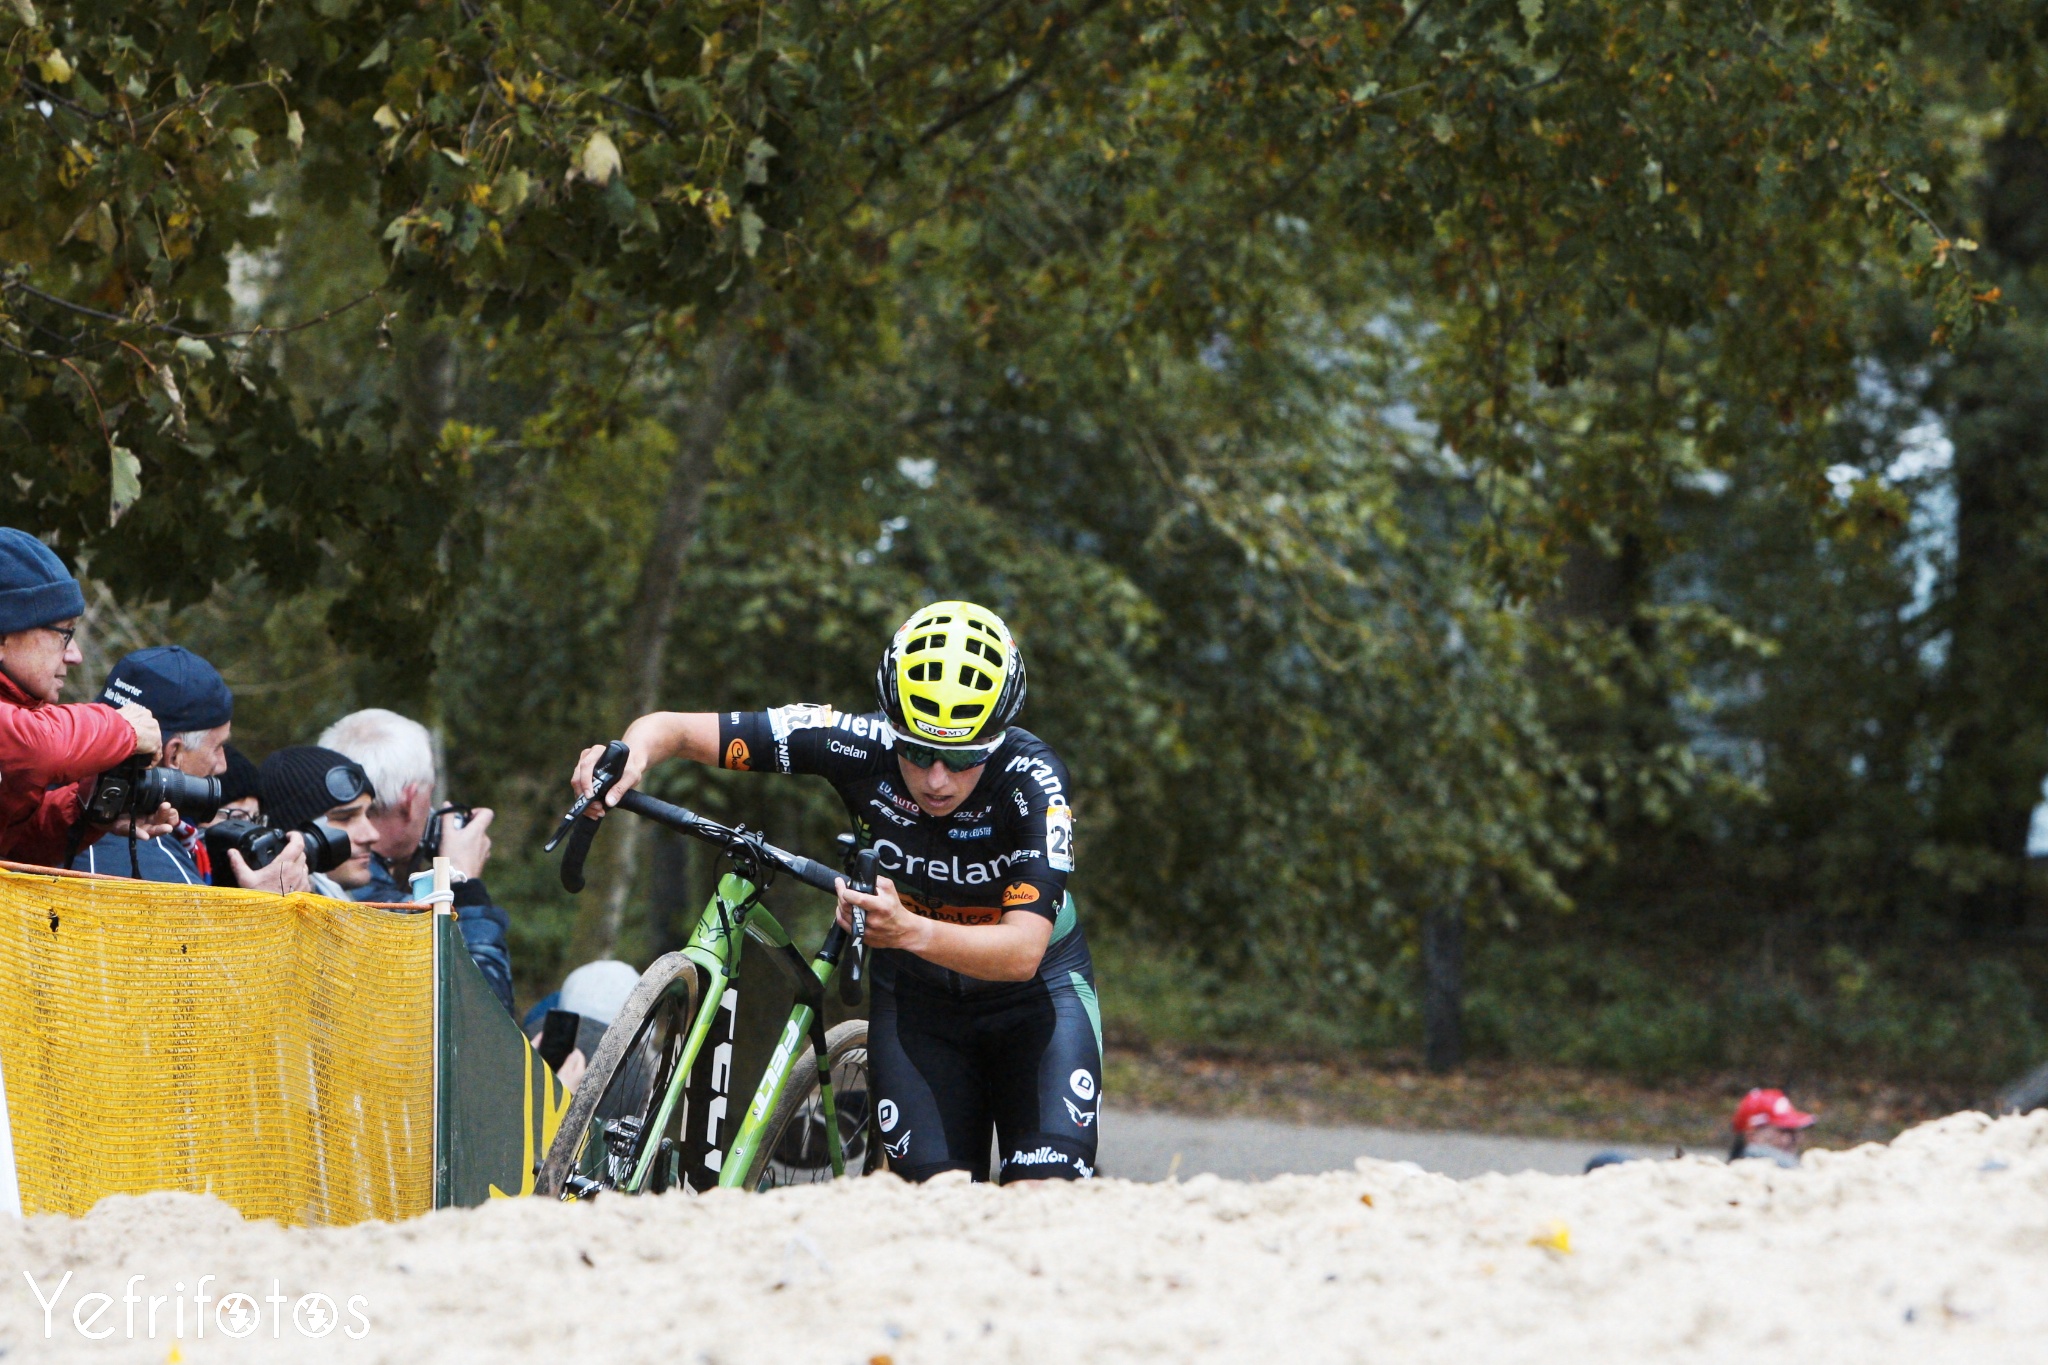 Koksijde - UCI Cyclocross World Cup - Maud Kaptheijns